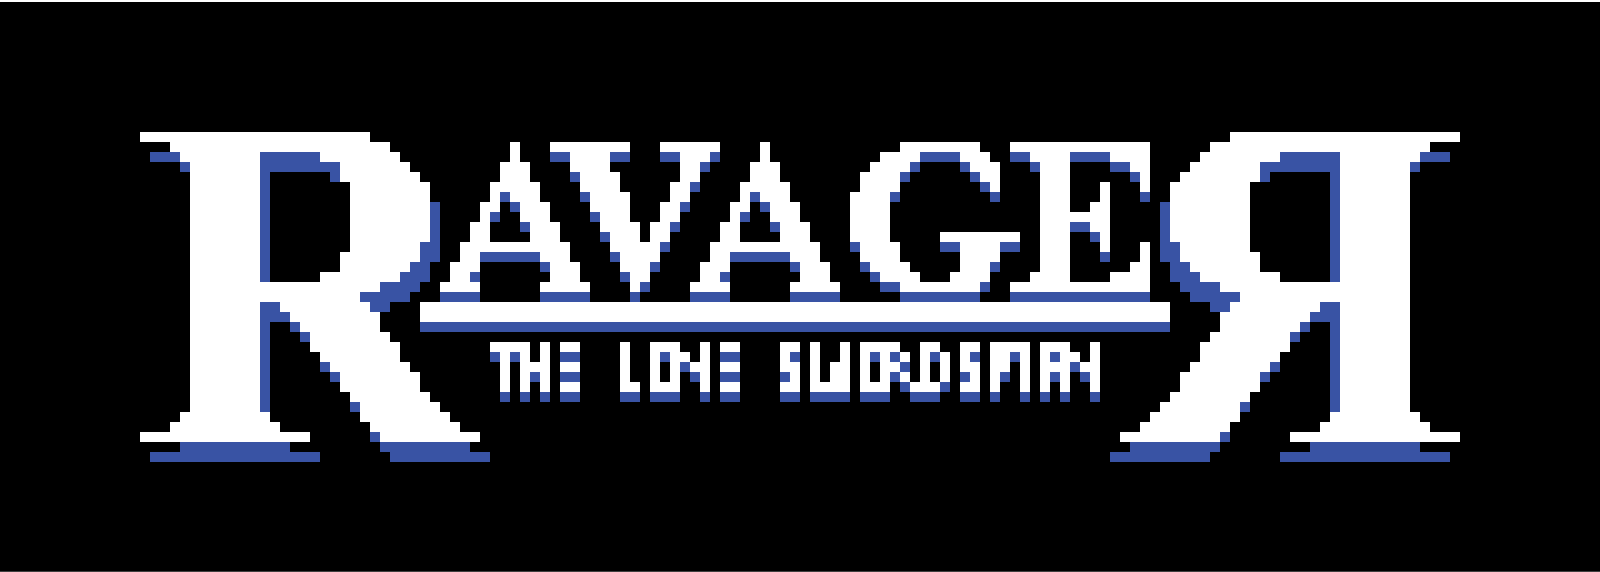 RavageR - The Lone Swordsman